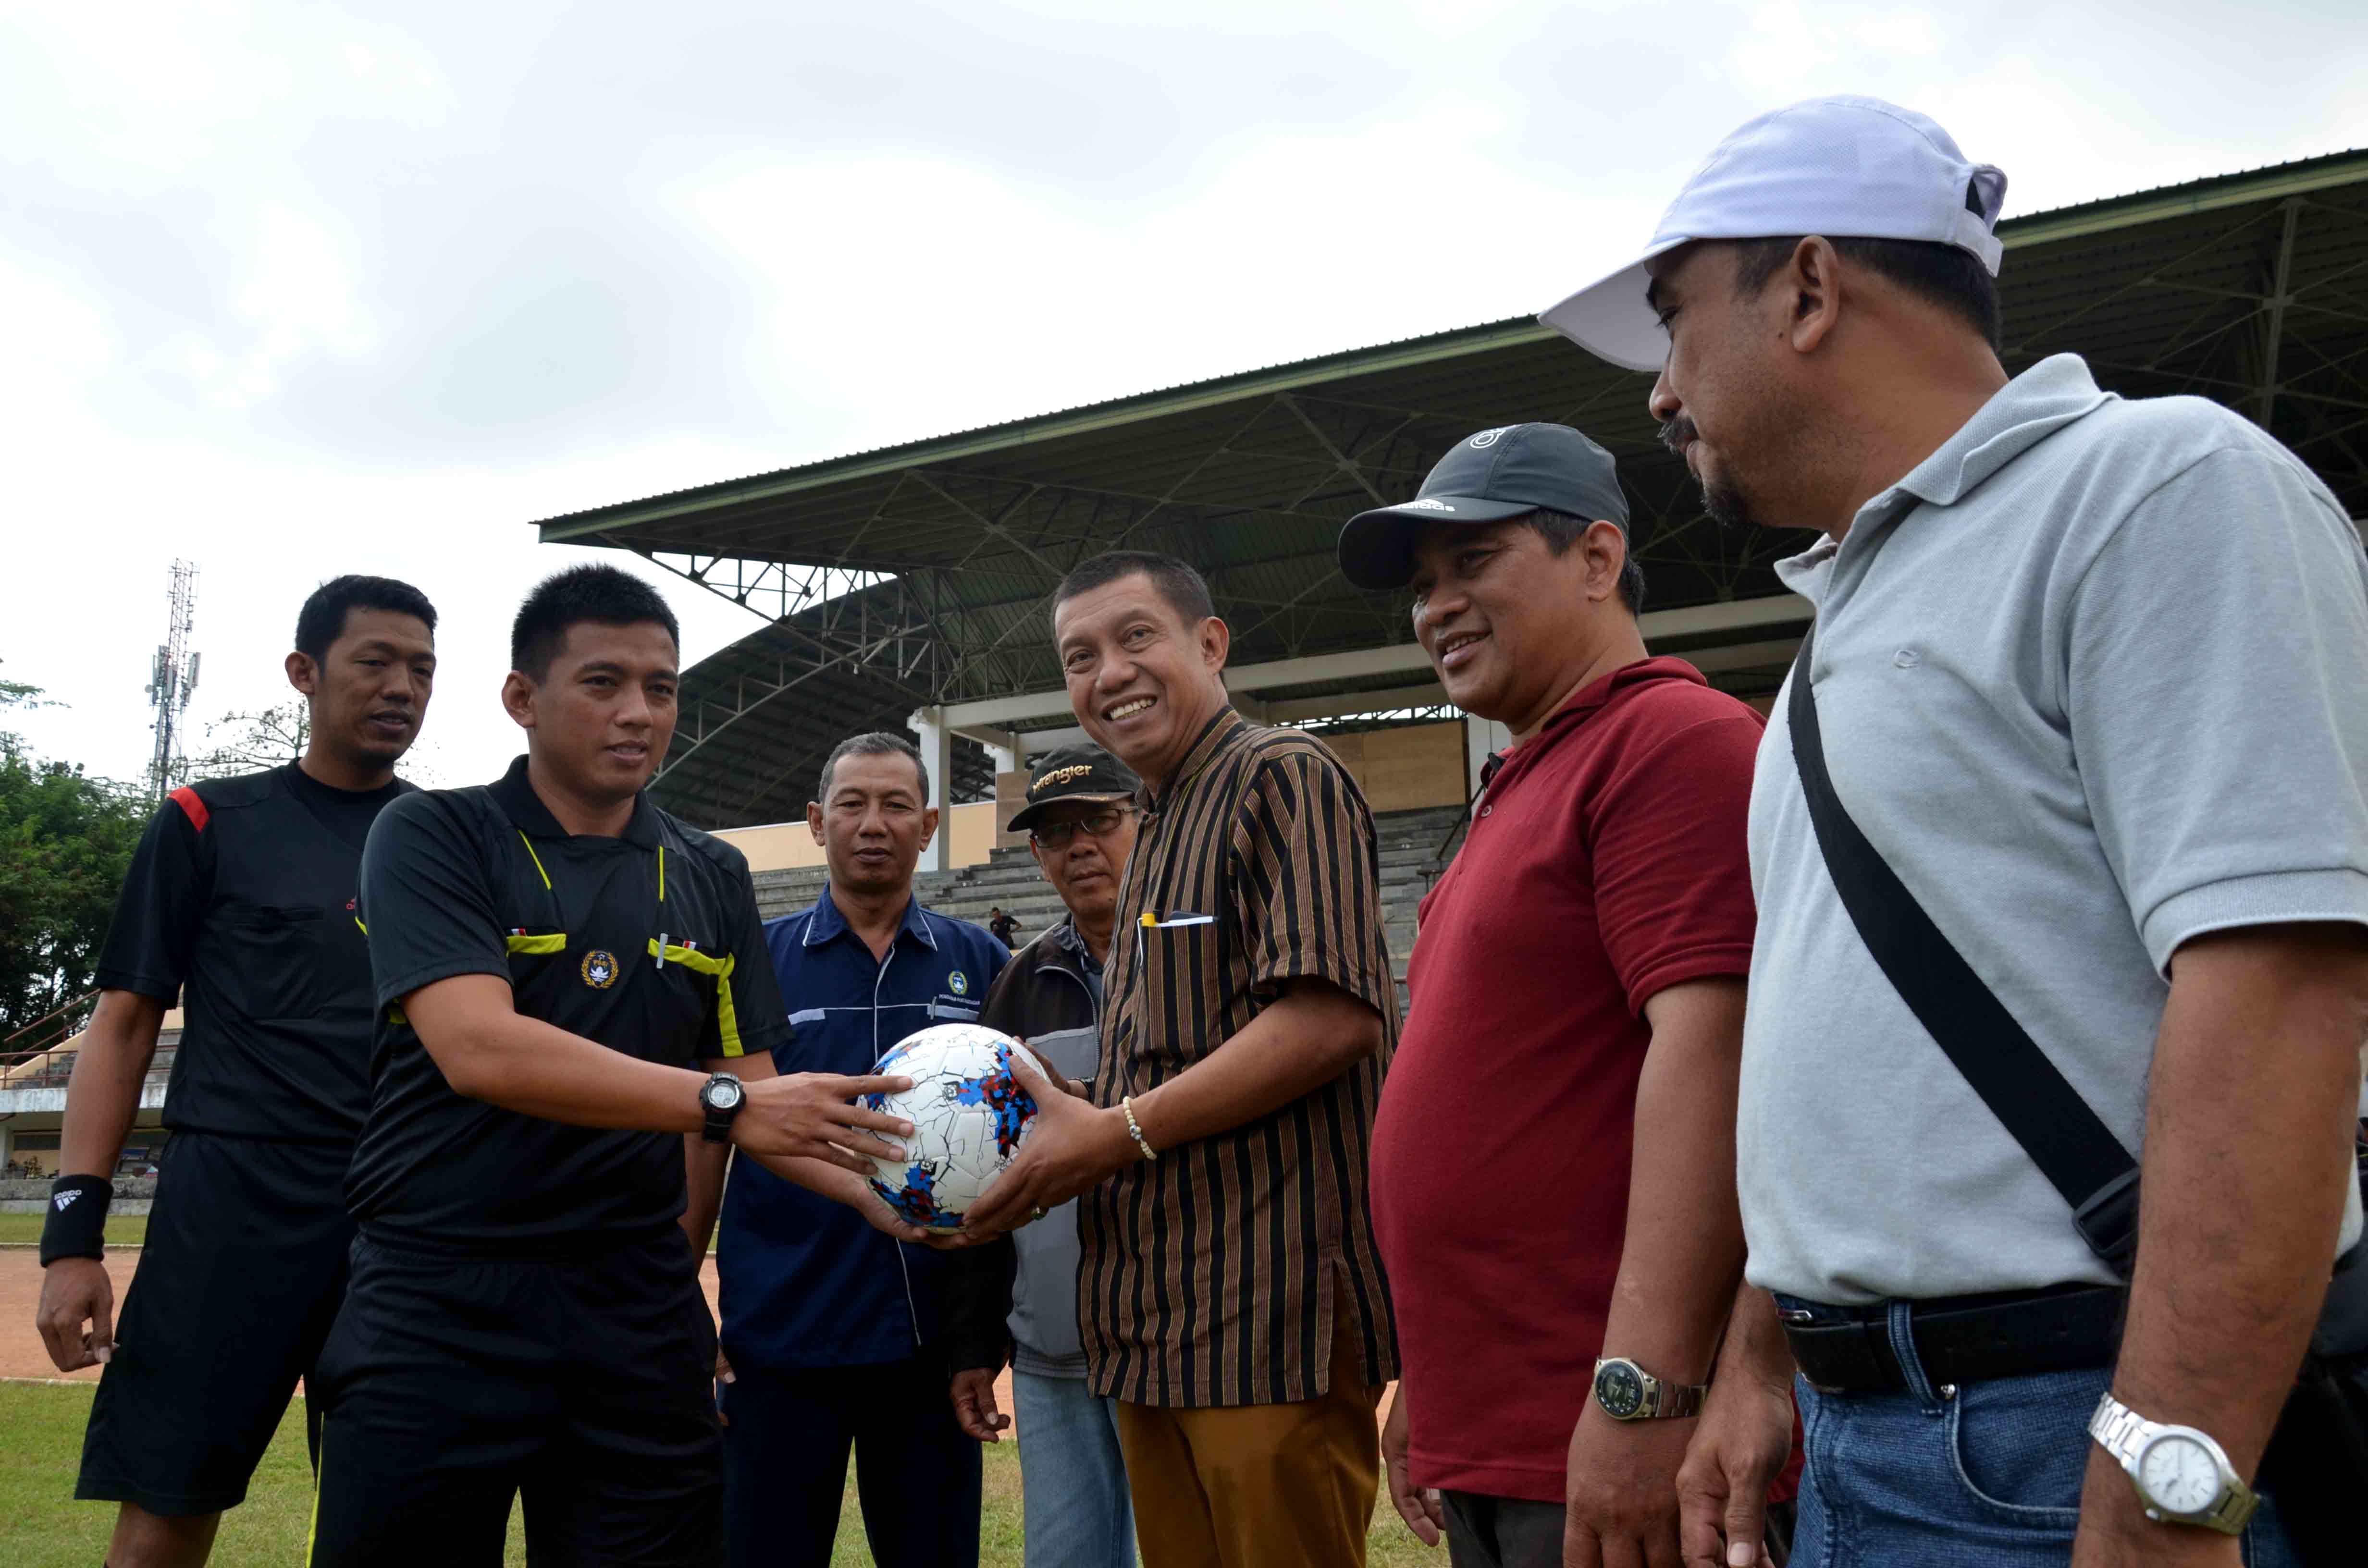 Walikota Yogyakarta Dukung Penuh Pembinaan Atlet Sepak Bola Di Kota Yogya